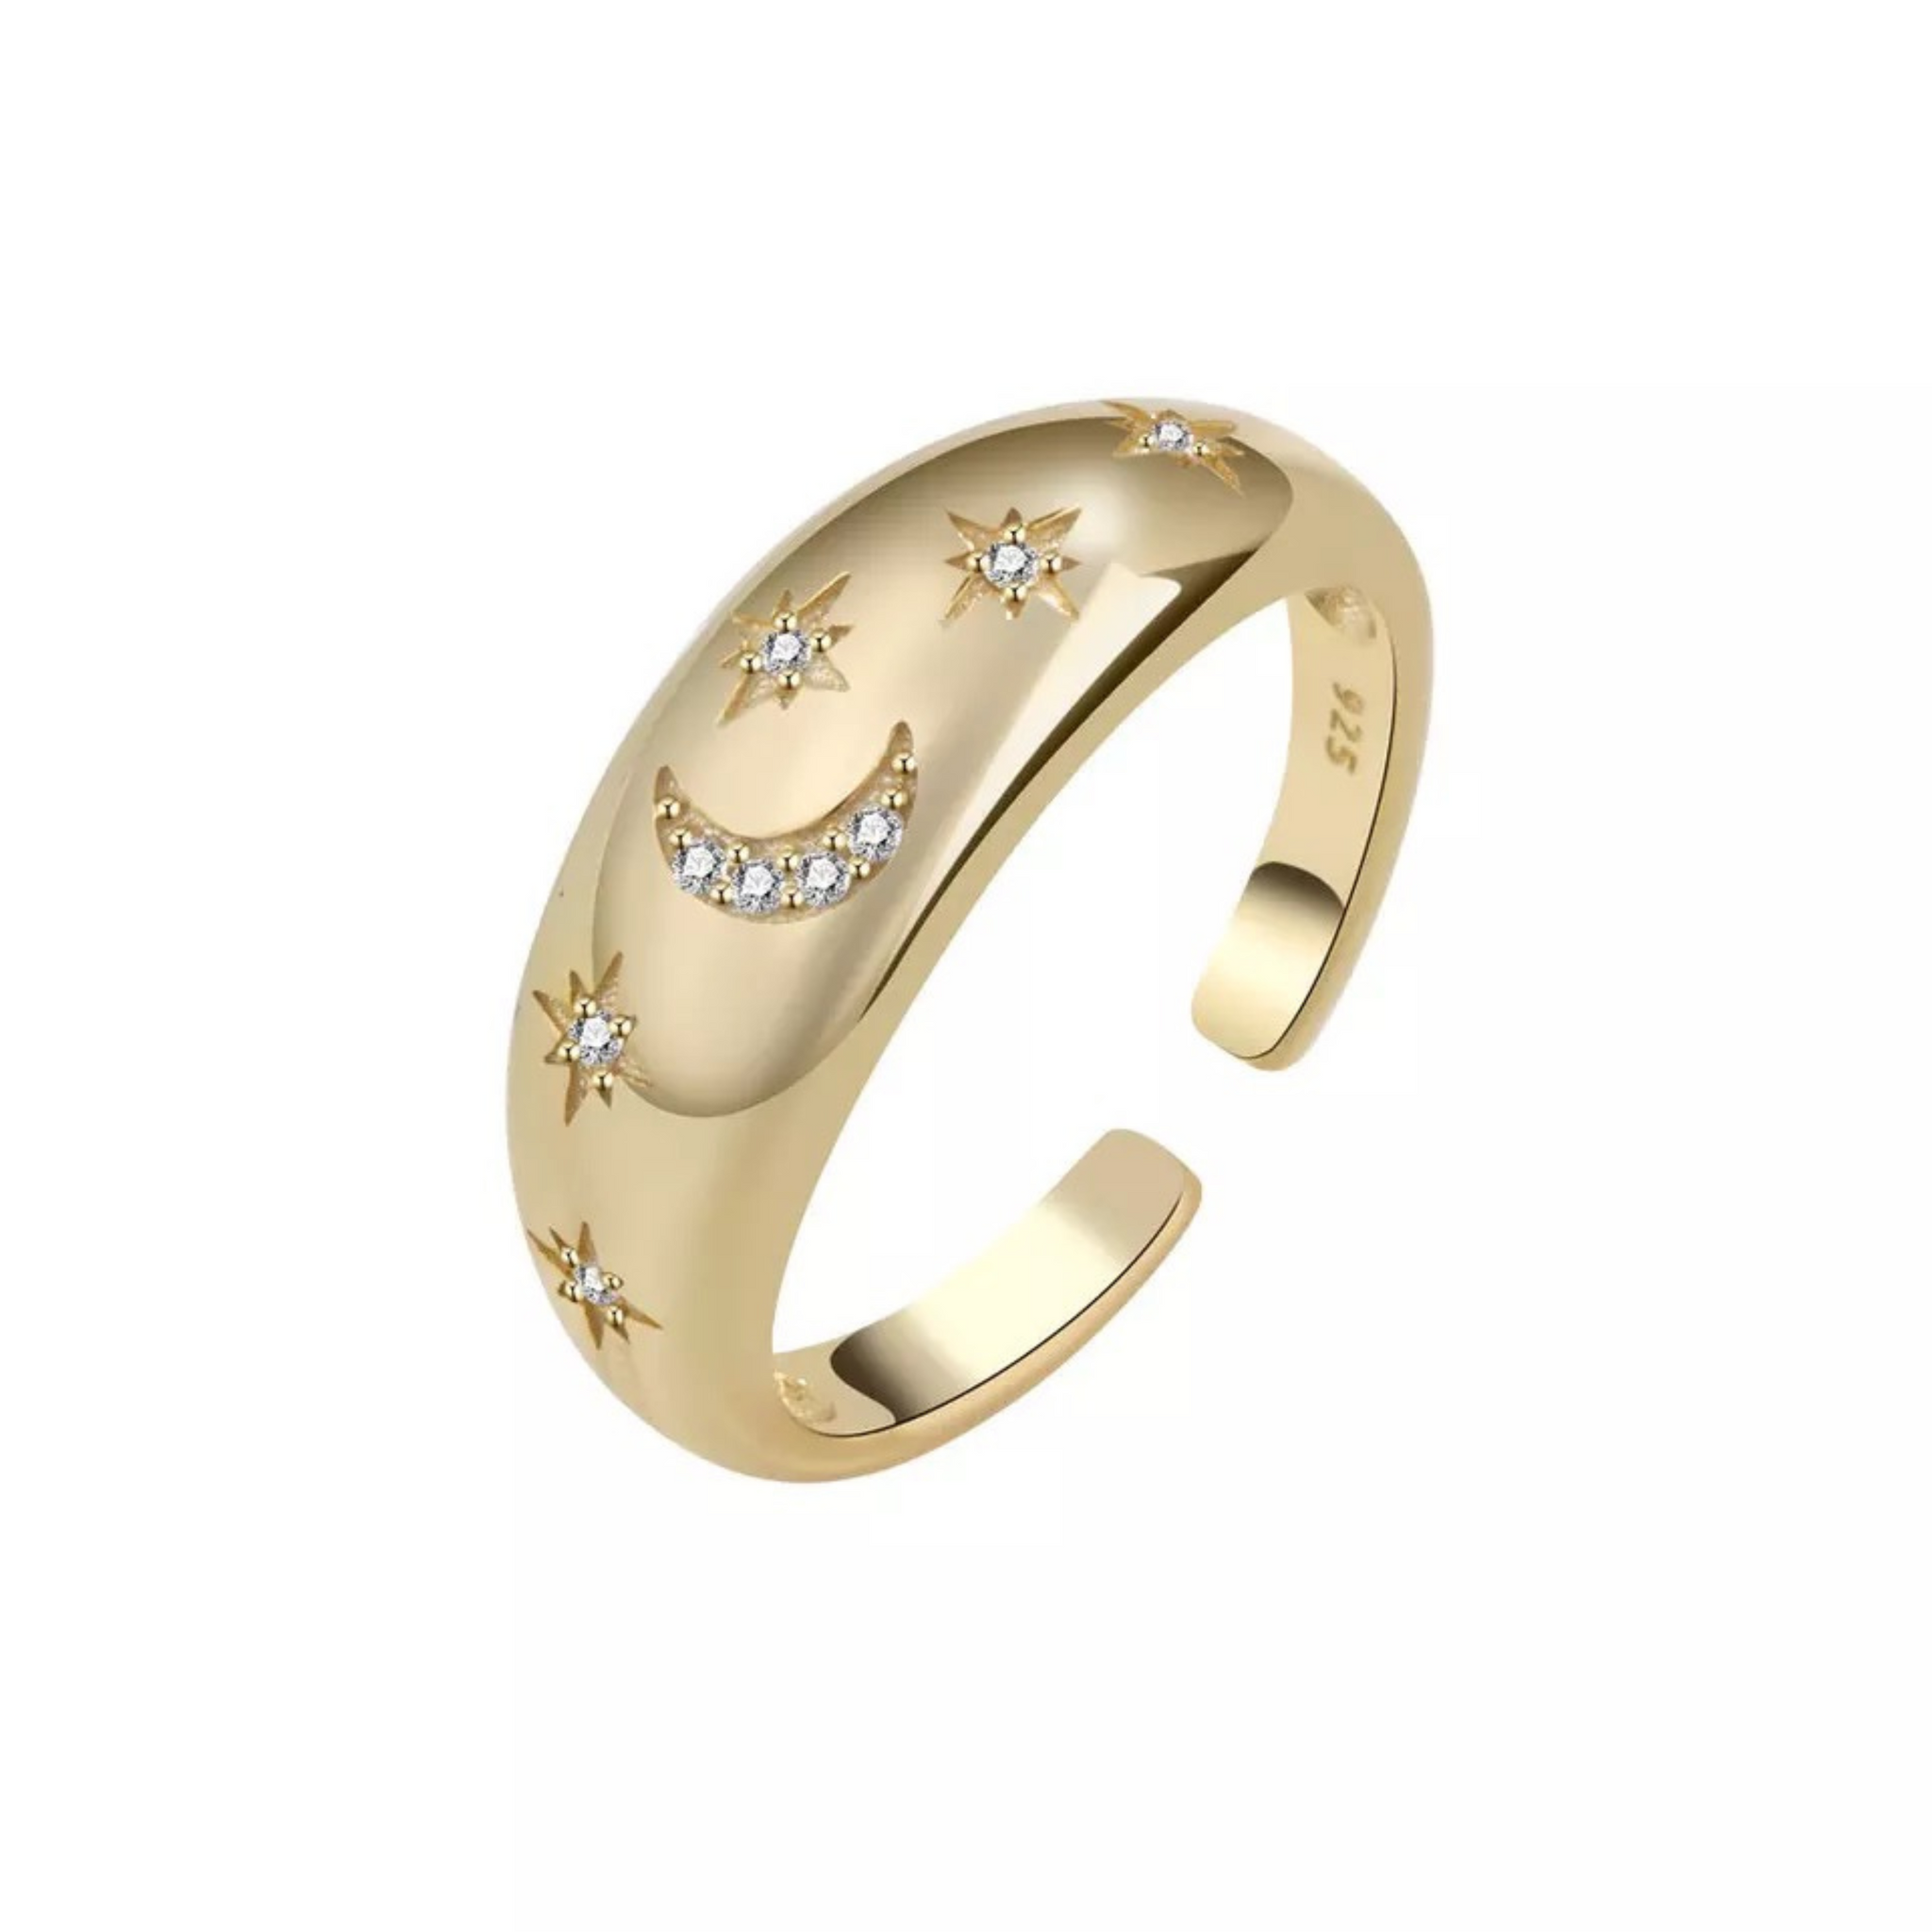 Nuray ring i guld.  Elegant guld ring med måne og stjerner med små zircon sten. Ringen kan bæres alene, men kan også mixes med vores mange andre ringe.  Materiale: 70% S925 sterling sølv, 30% rustfri stål, 14 karat guldbelagt, zircon-sten, nikkelfri Størrelse: Justerbar